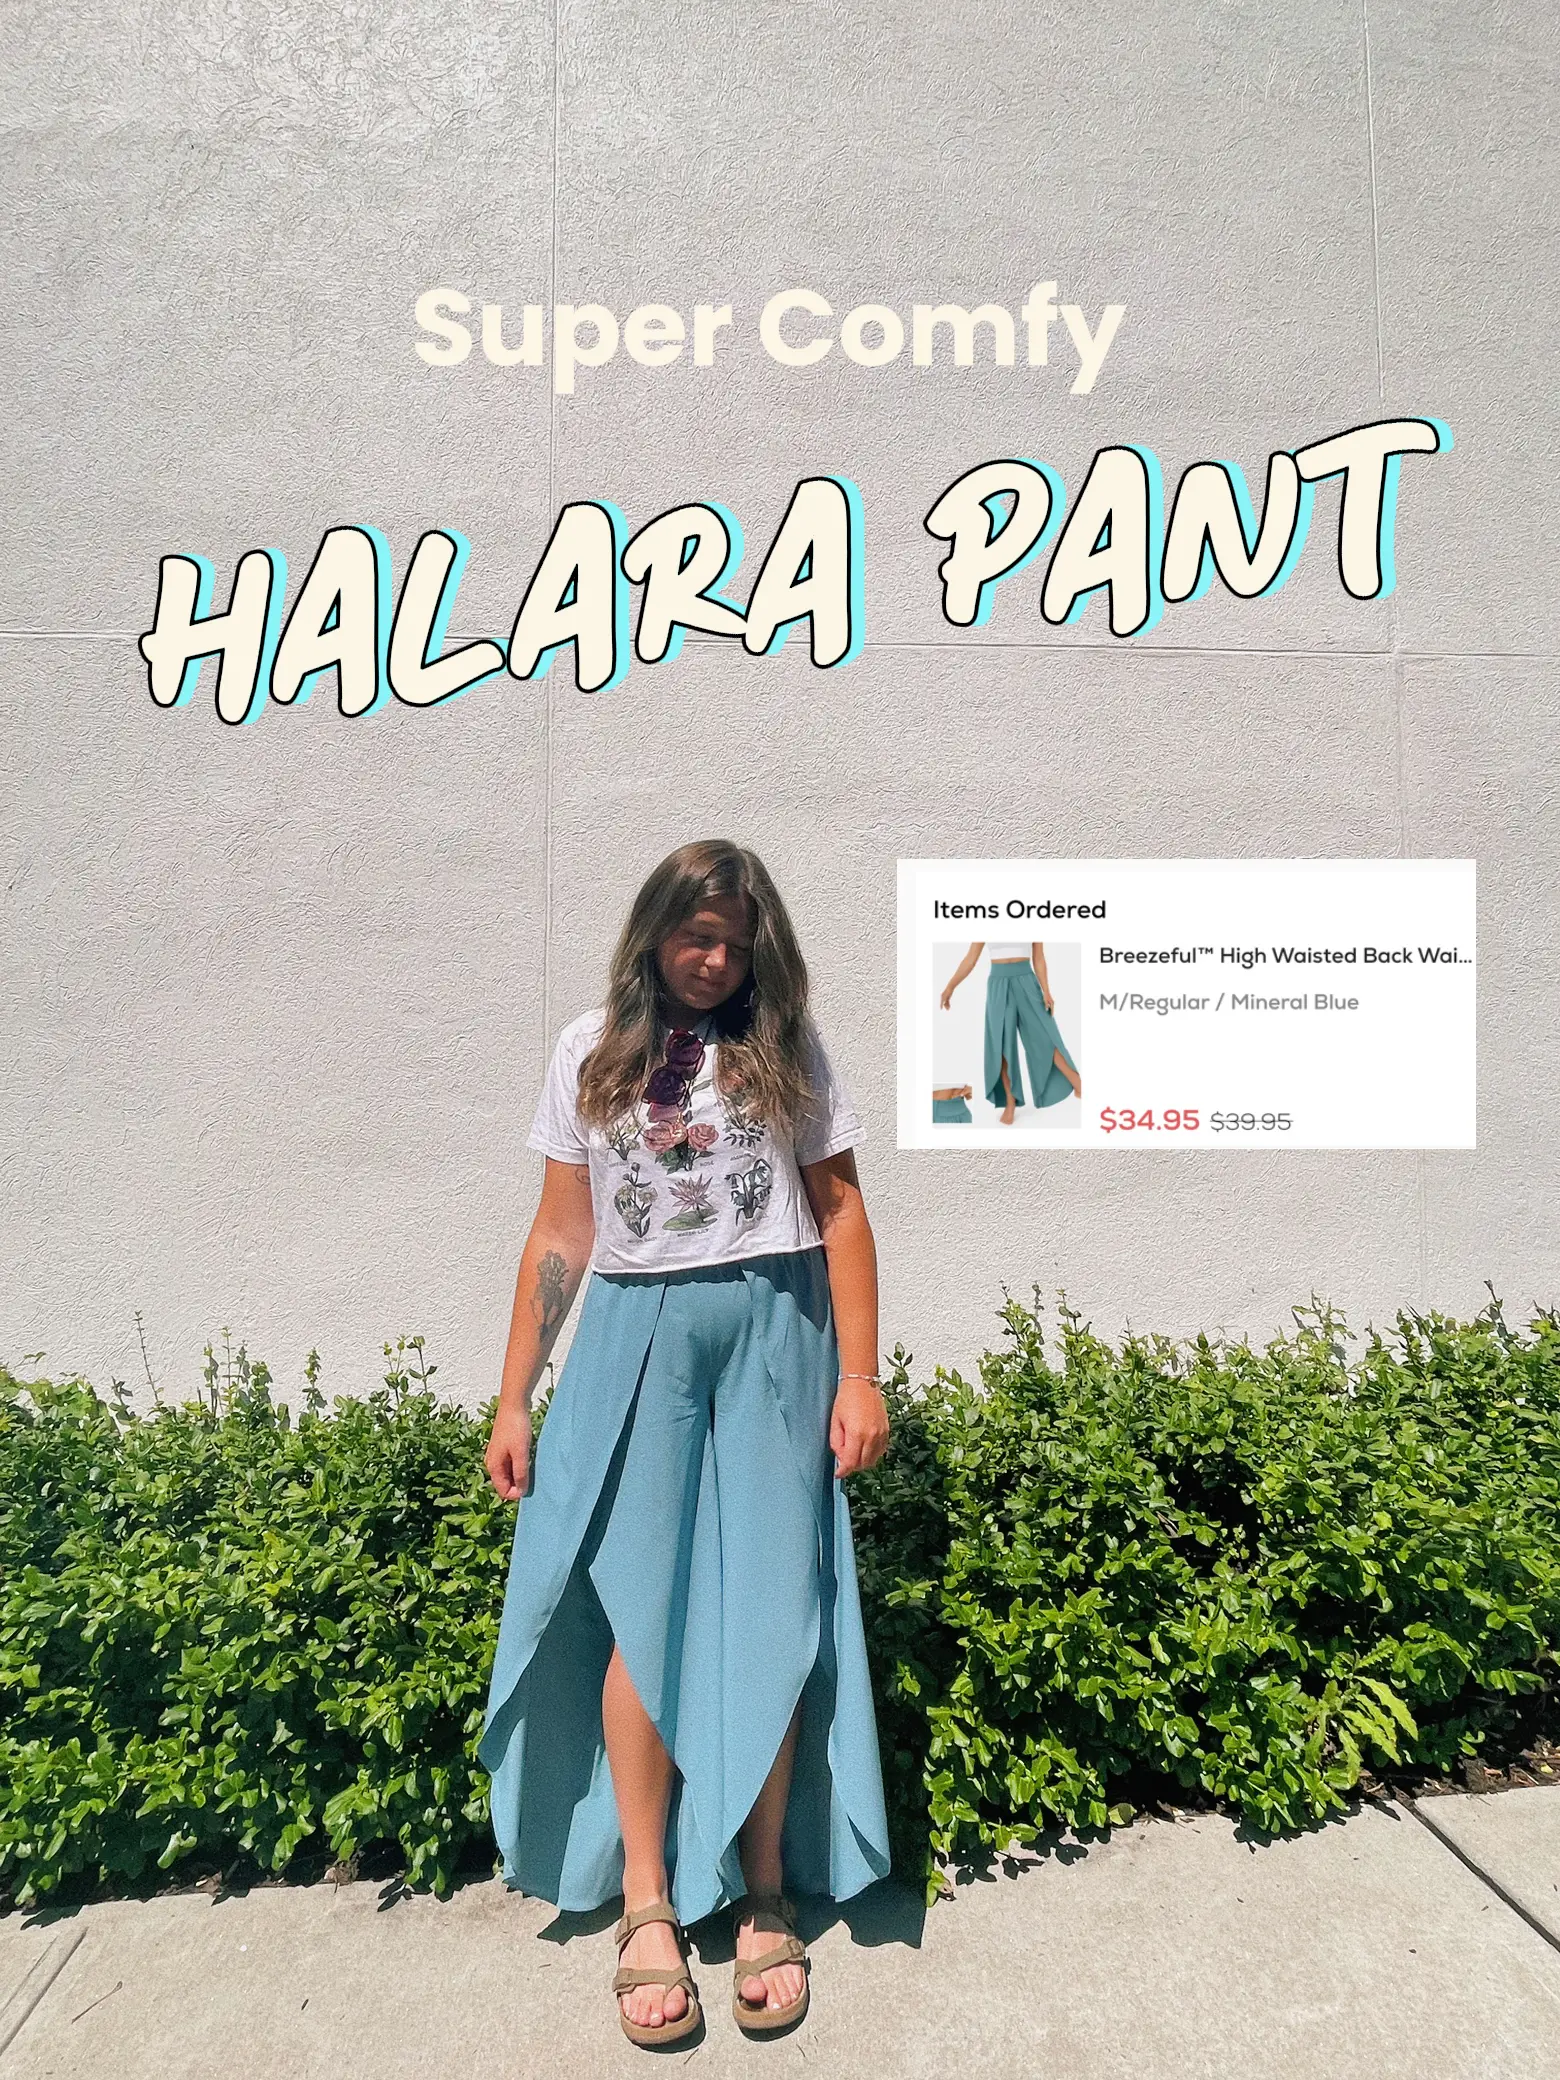 SUPER COMFY HALARA PANT, Gallery posted by Marissa